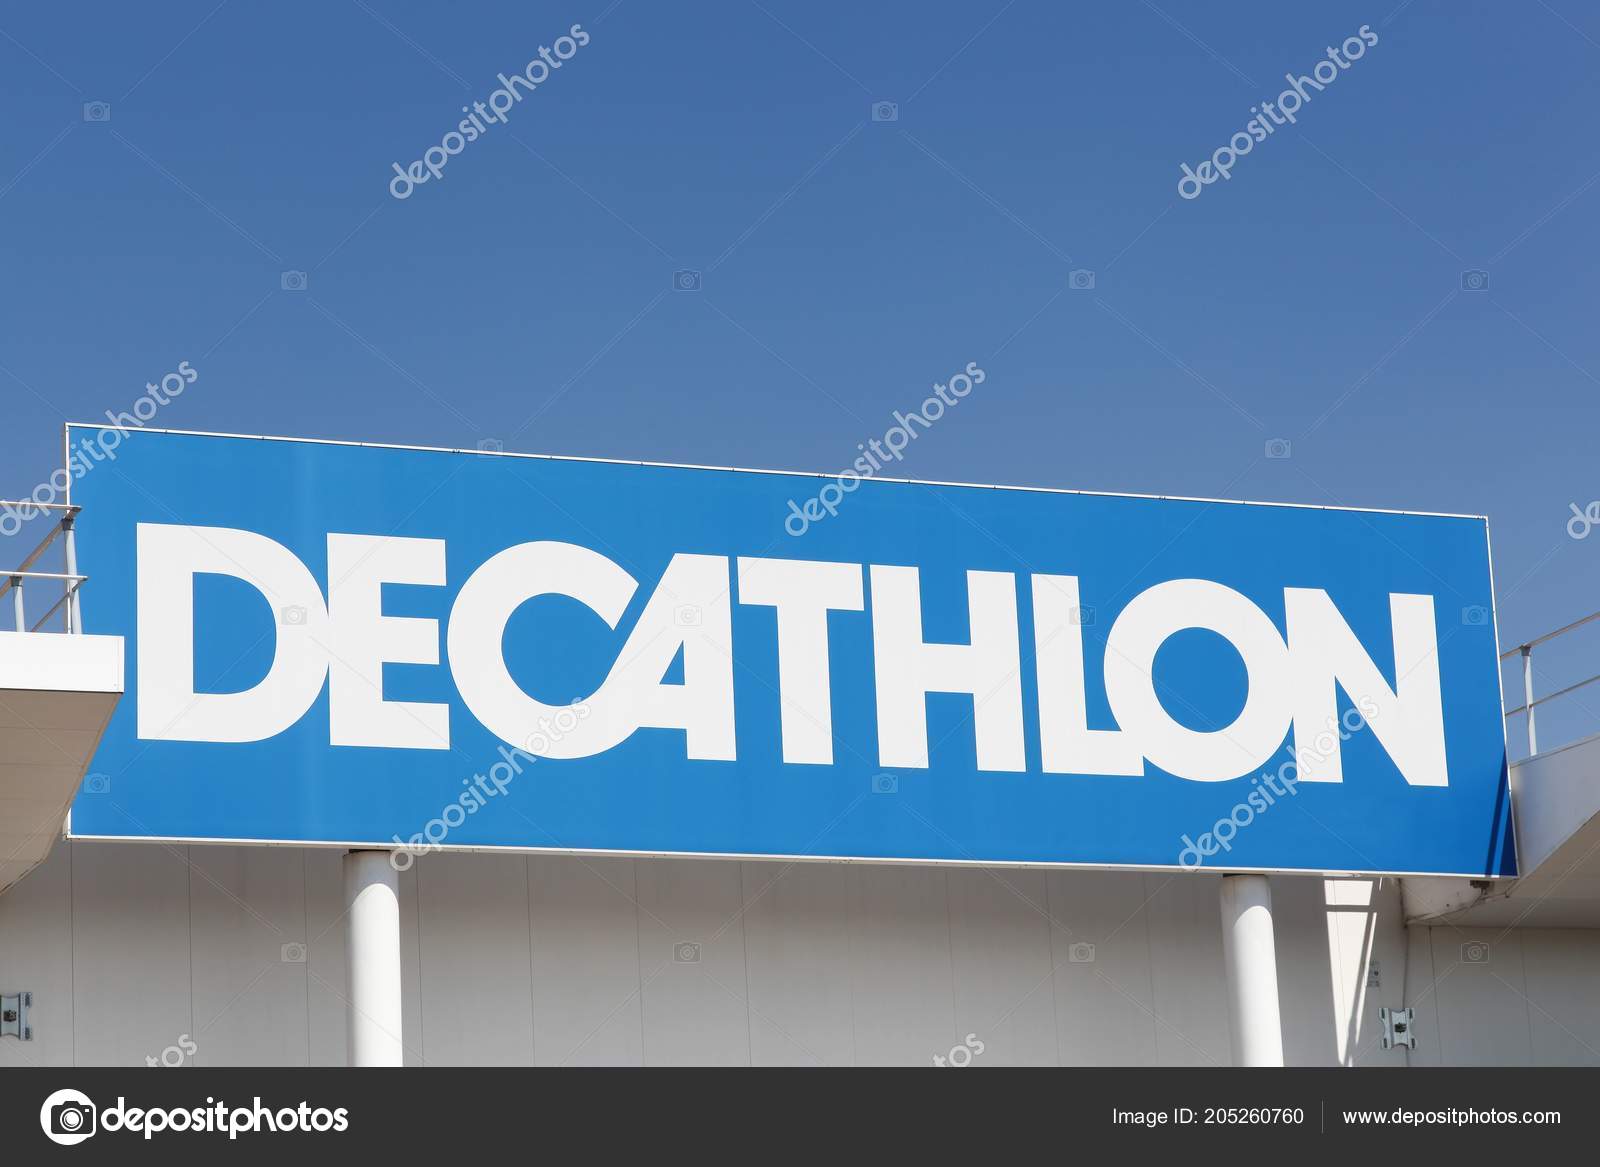 decathlon 2018